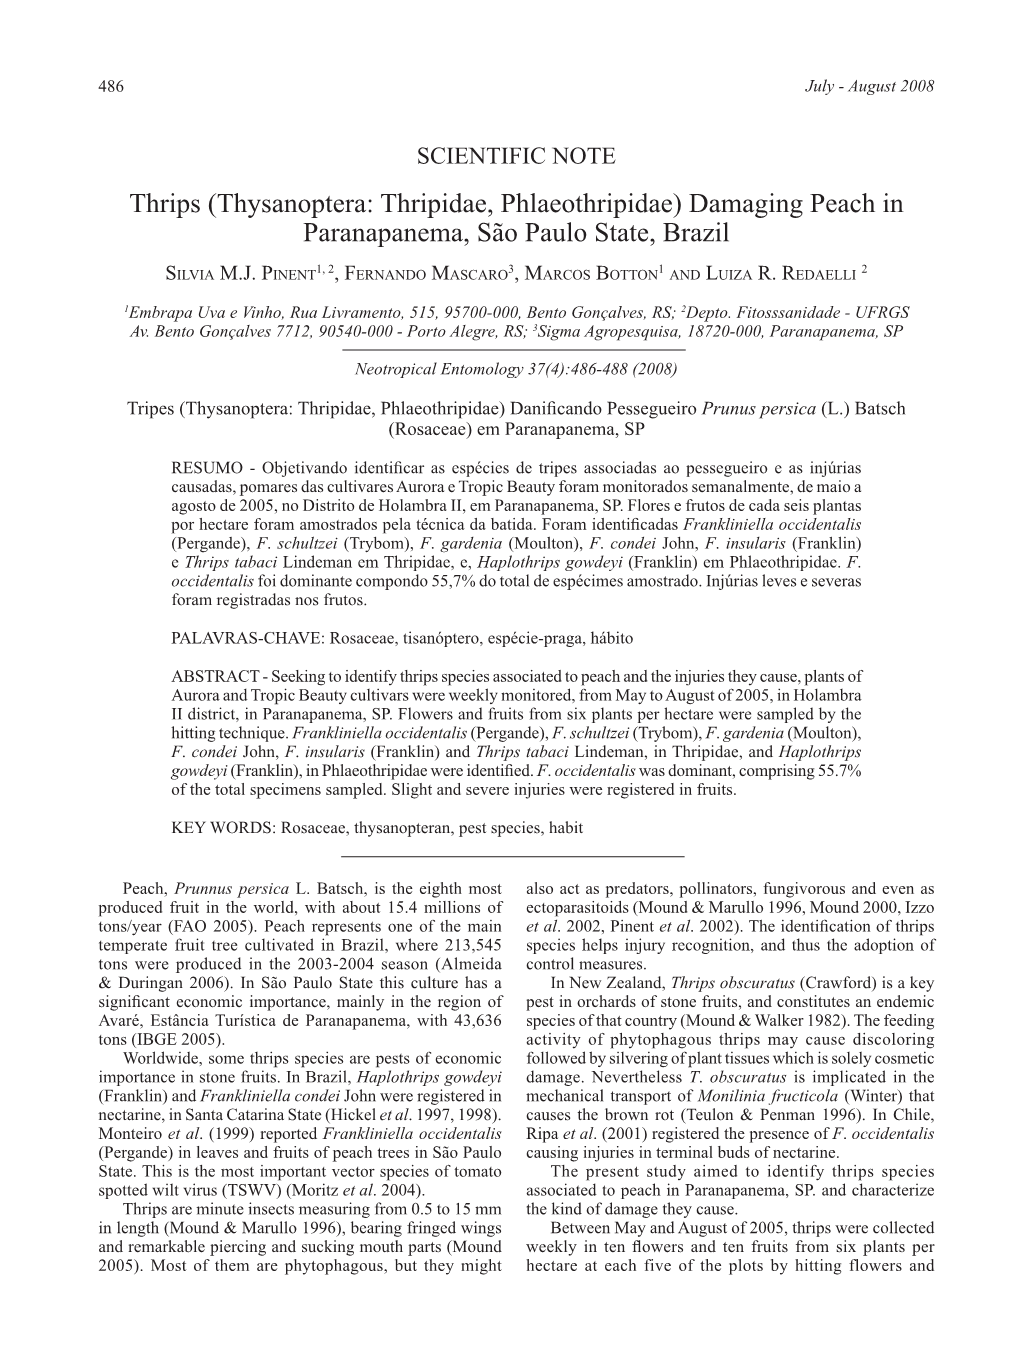 Thrips (Thysanoptera: Thripidae, Phlaeothripidae) Damaging Peach in Paranapanema, São Paulo State, Brazil